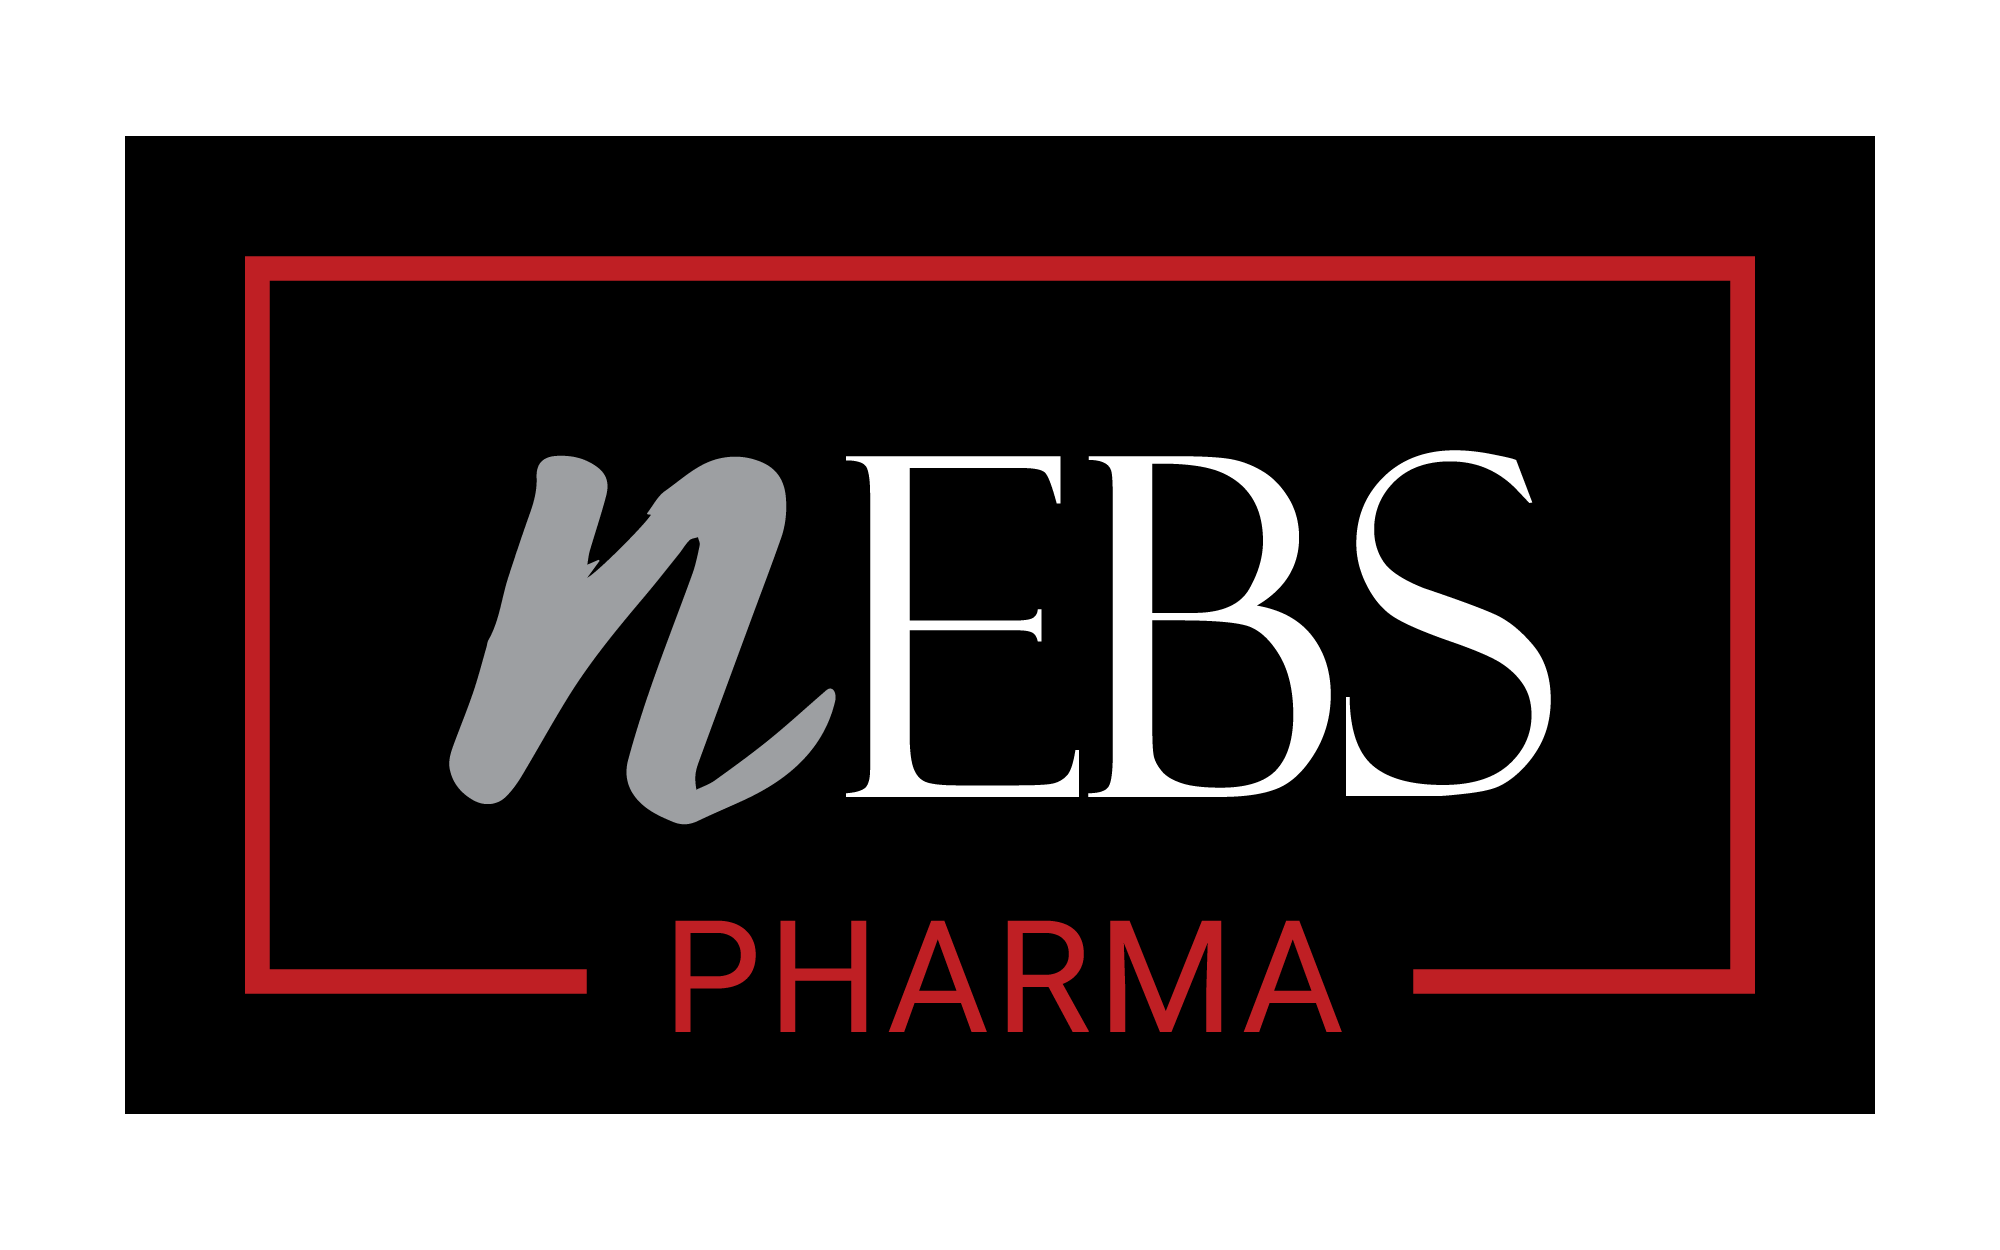 Nebs Pharma